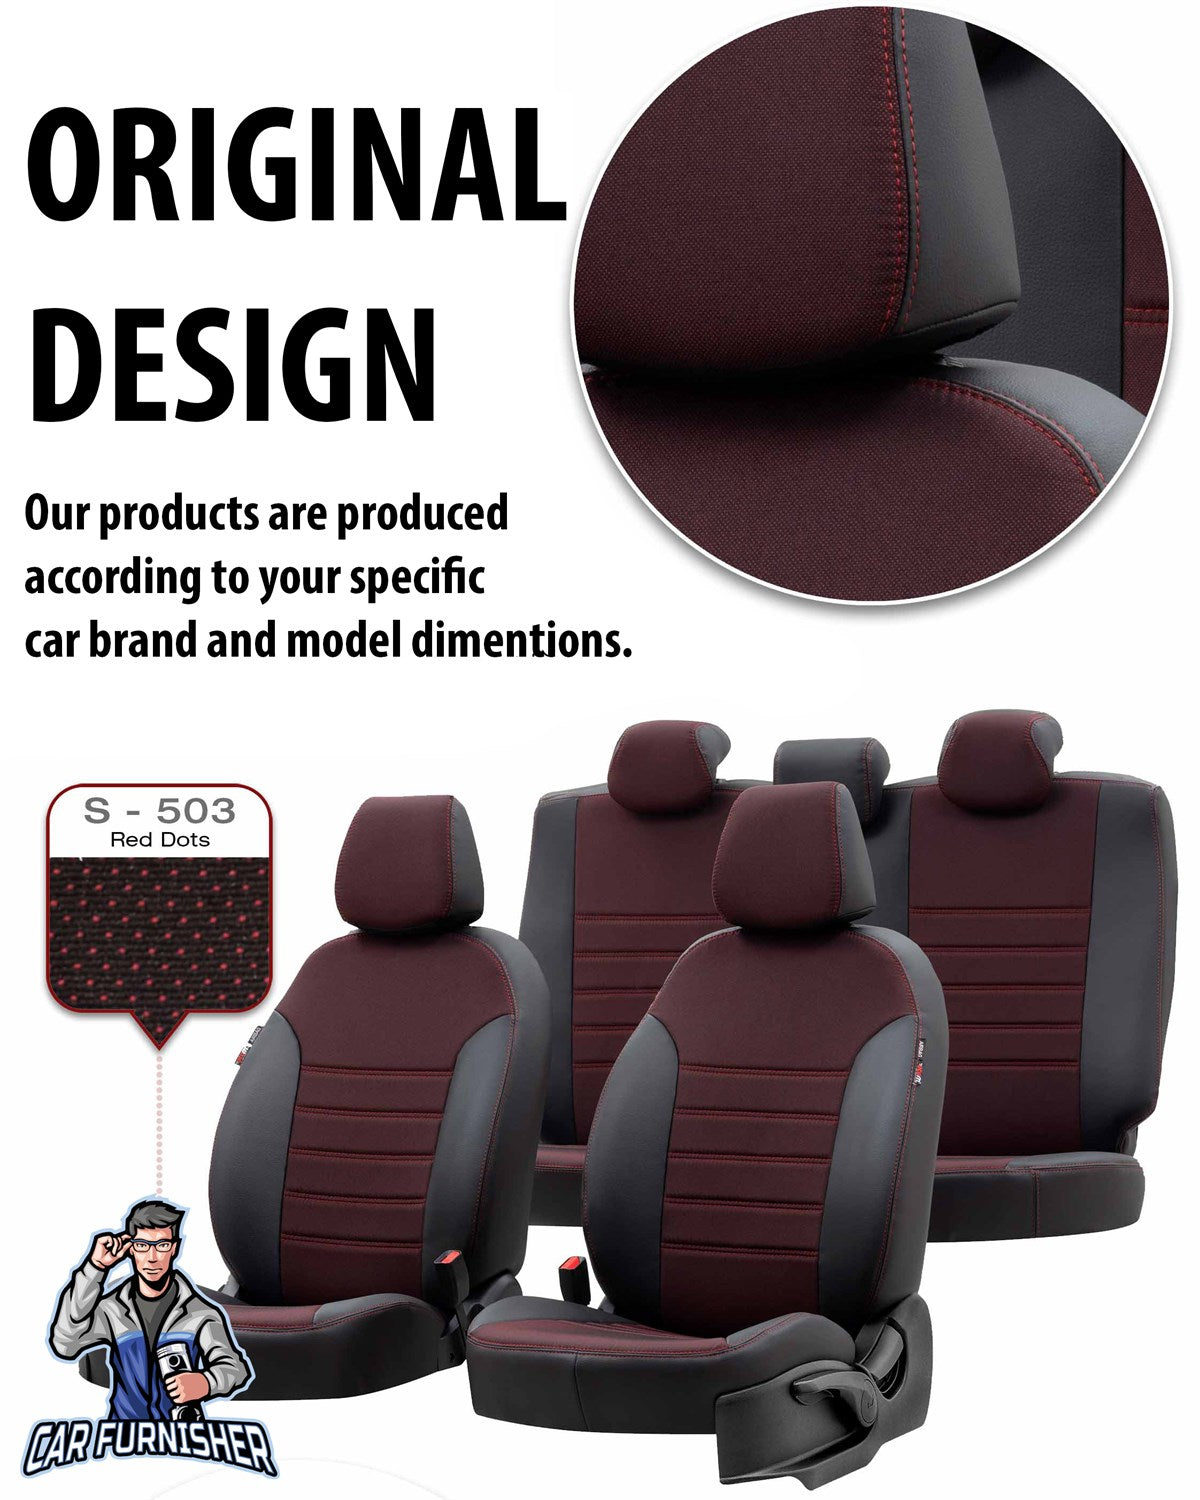 Toyota Corolla Seat Cover Paris Leather & Jacquard Design Dark Beige Leather & Jacquard Fabric